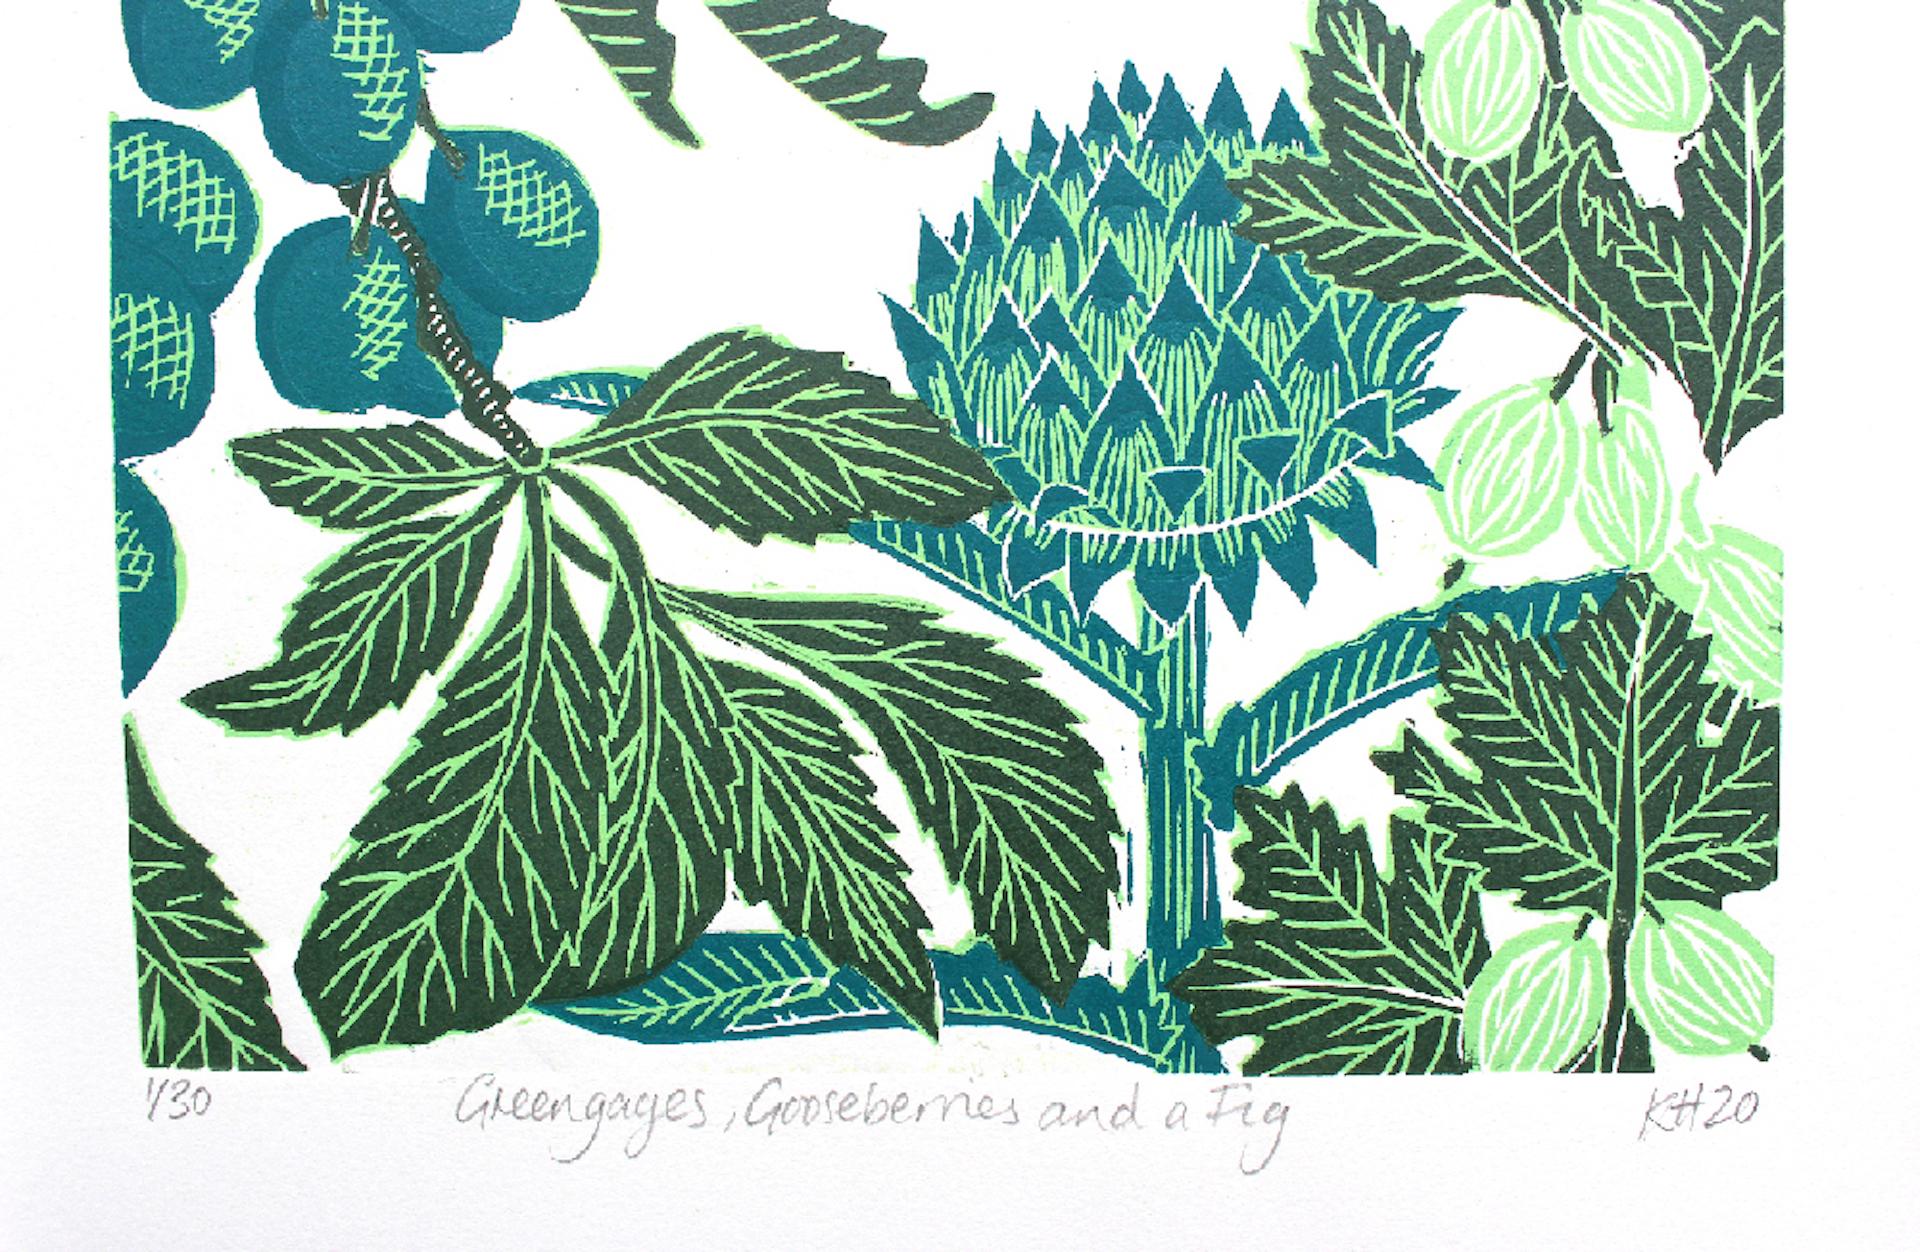 Greengages, Gooseberries and a Fig, Floral Art, Leaf Art, Spring Art, Green Art 1